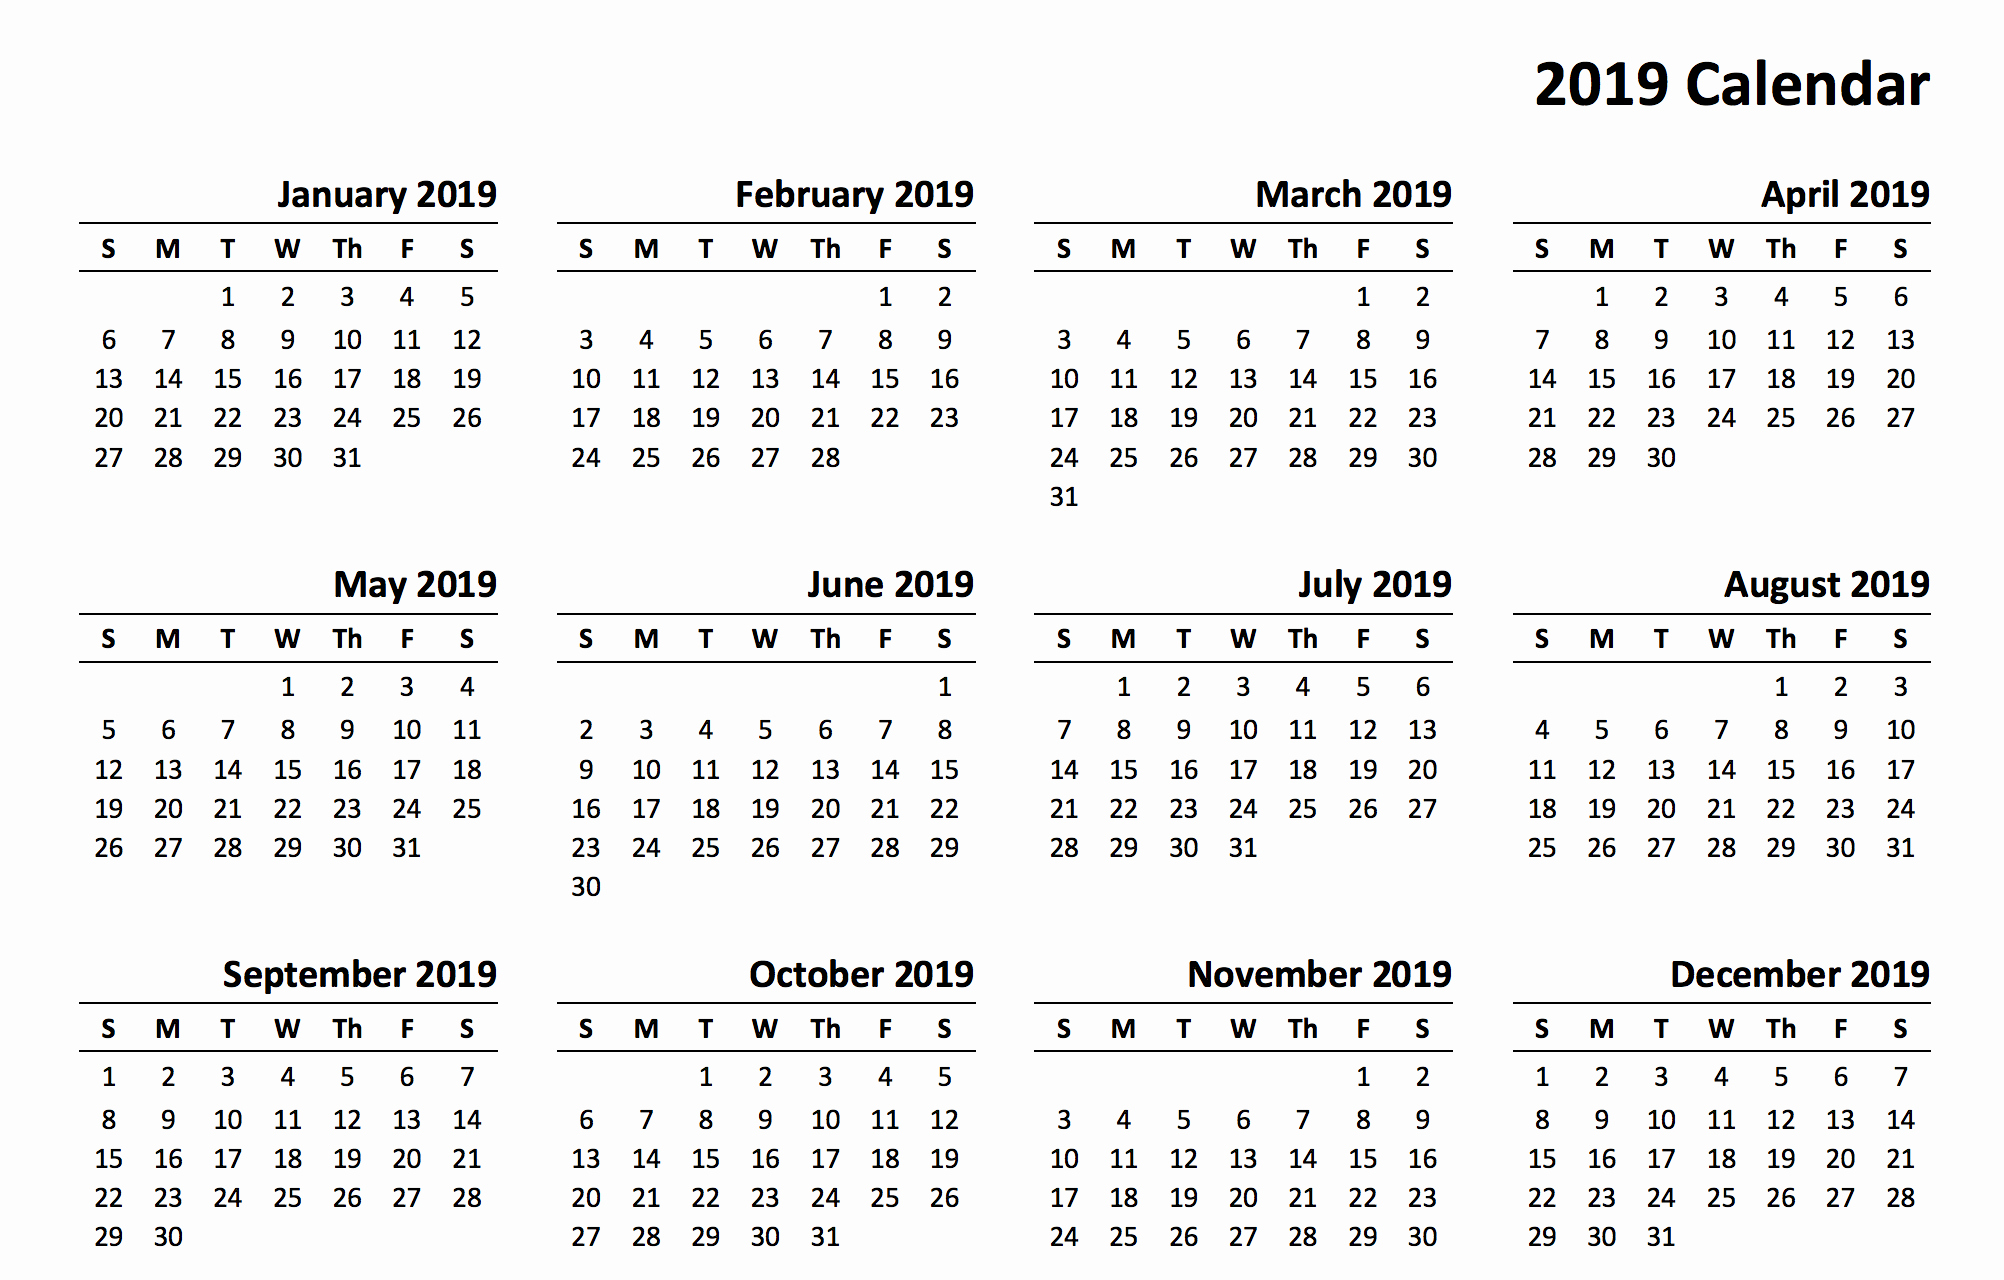 2019 Printable Calendar by Month Lovely 2019 Calendar Amazonaws